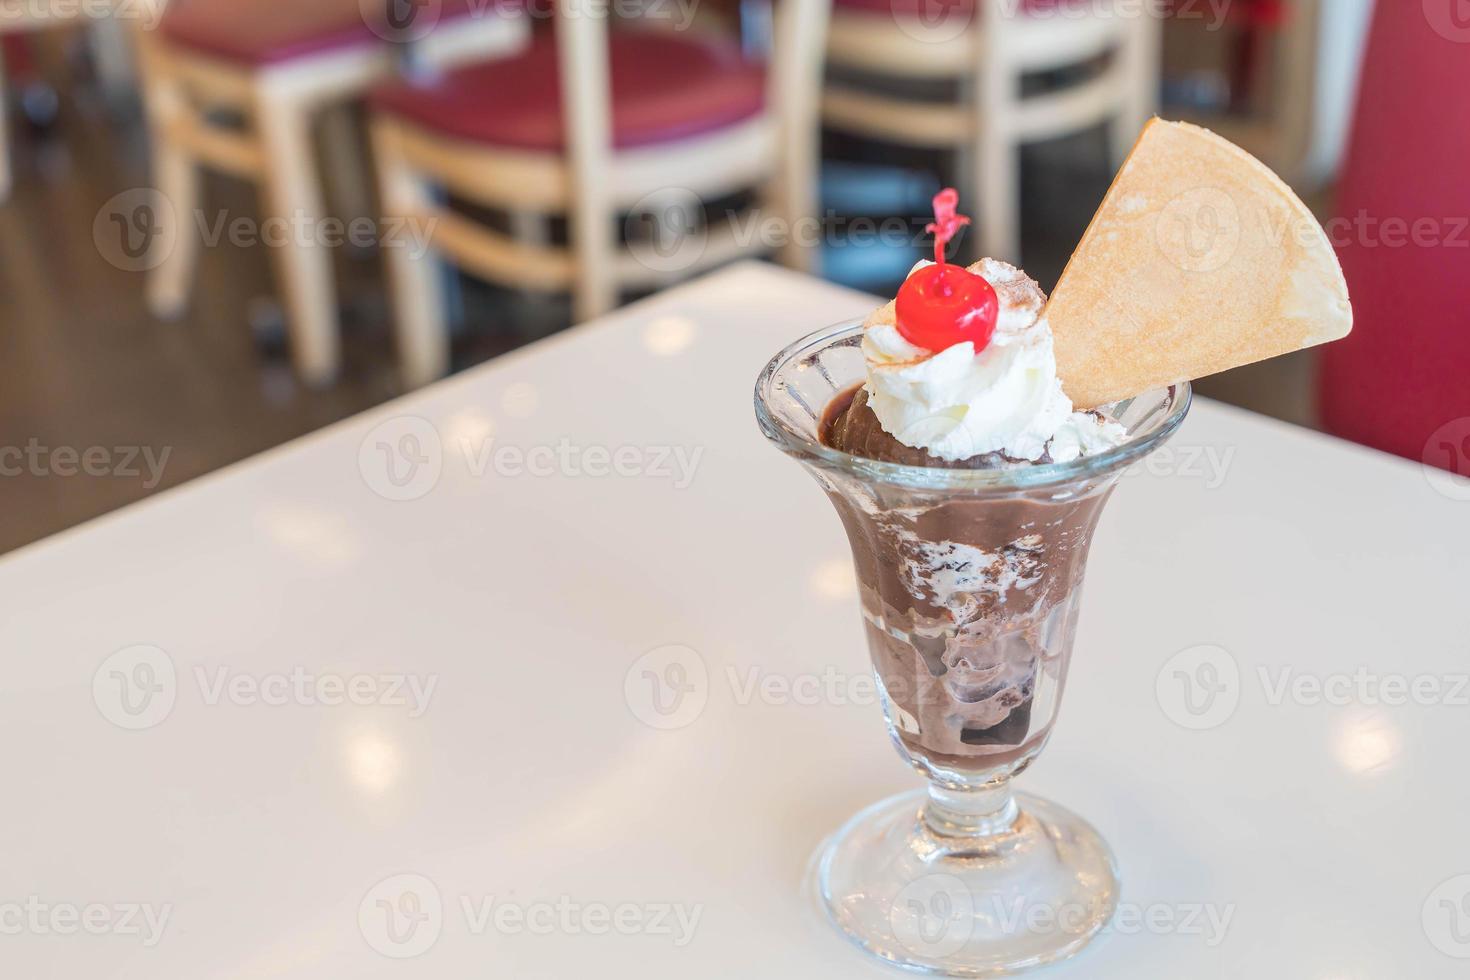 gelato al cioccolato al bar foto